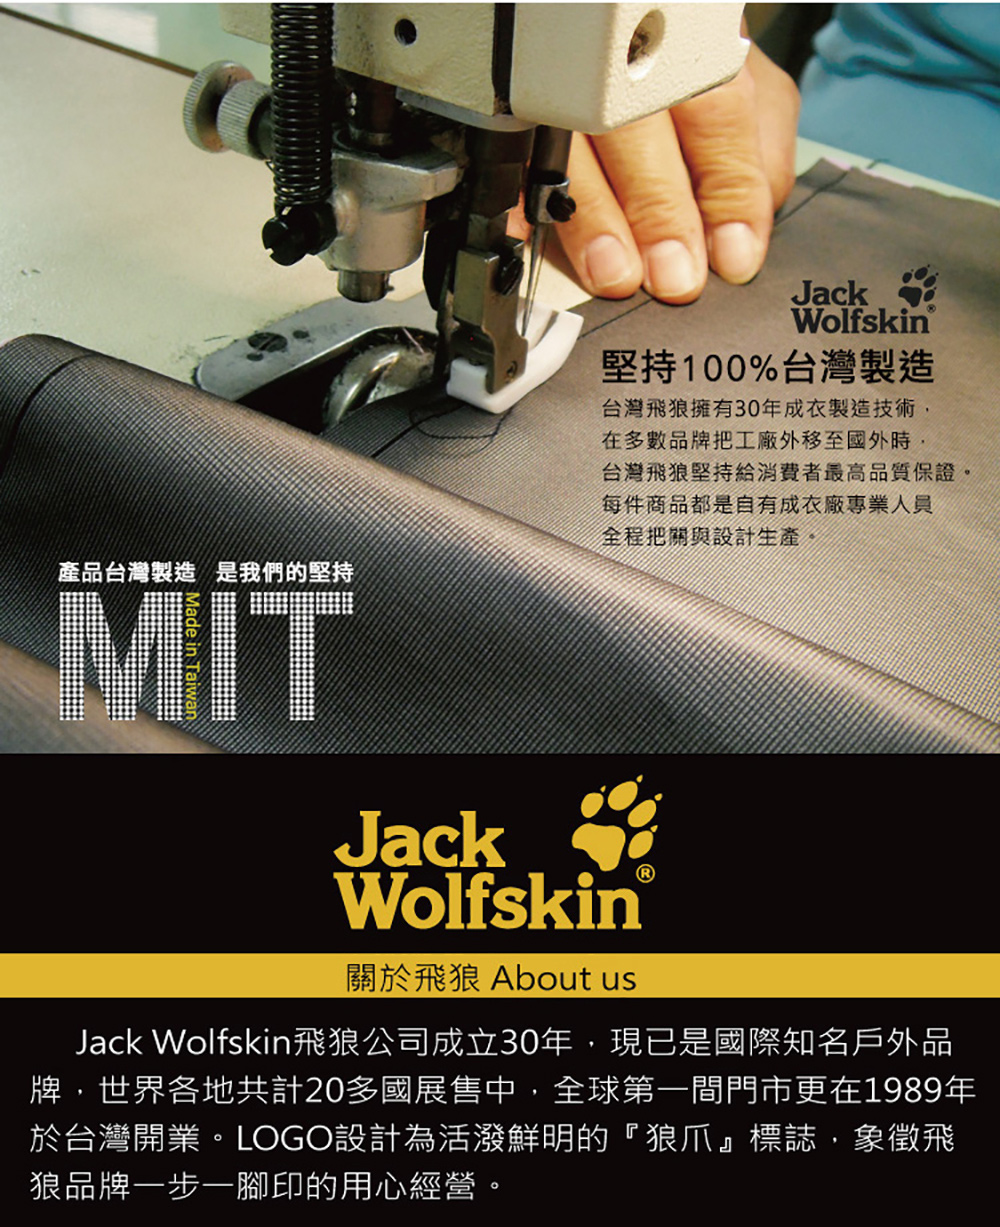 Jack Wolfskin飛狼公司成立30年,現已是國際知名戶外品